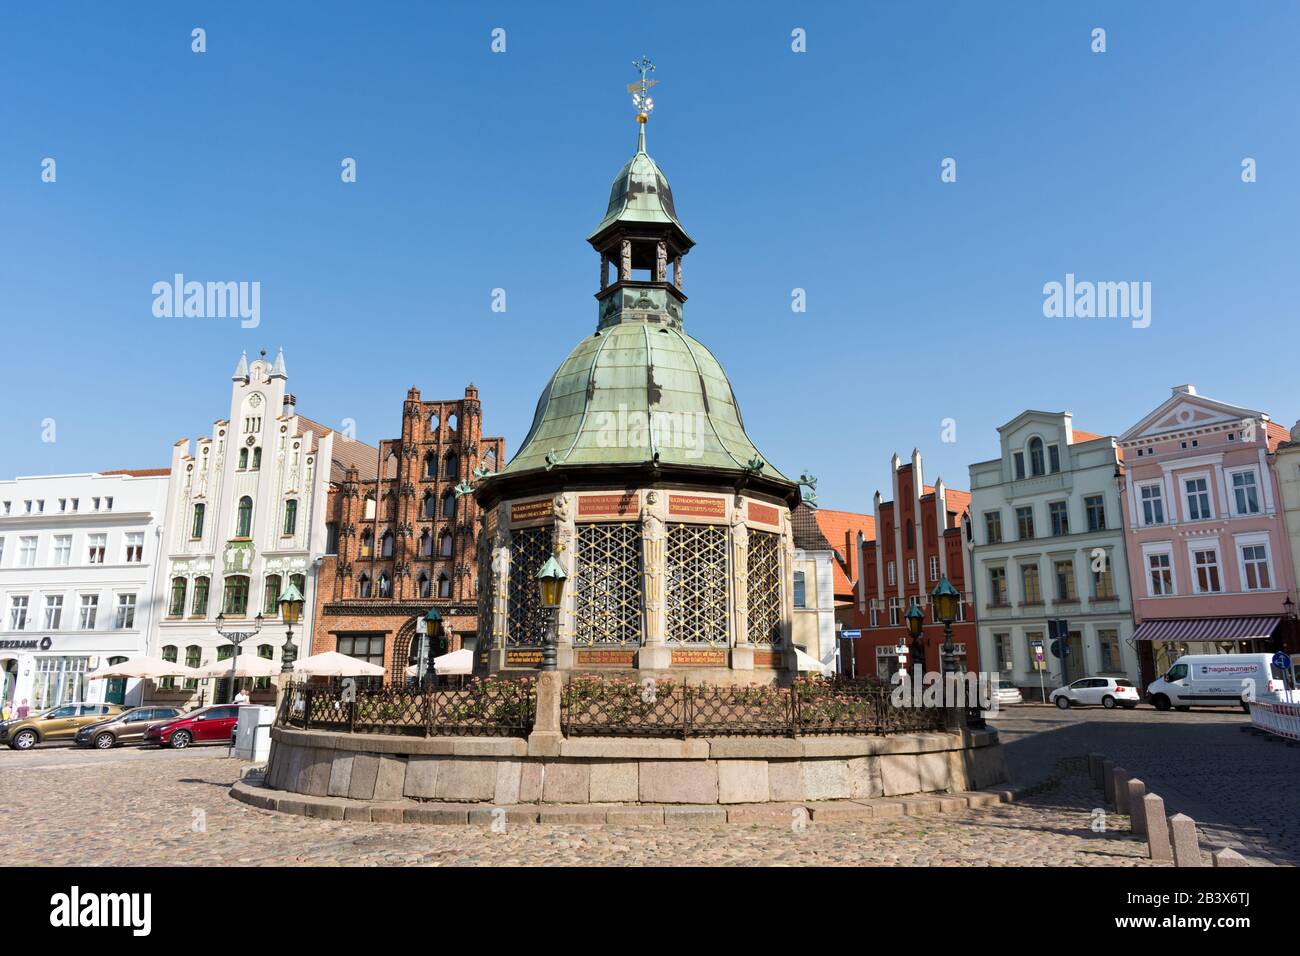 Market Square with the Landmark Waterworks or Wasserkunst, Hanseatic City of Wismar, Mecklenburg Western Pomerania, Germany, Europe Stock Photo